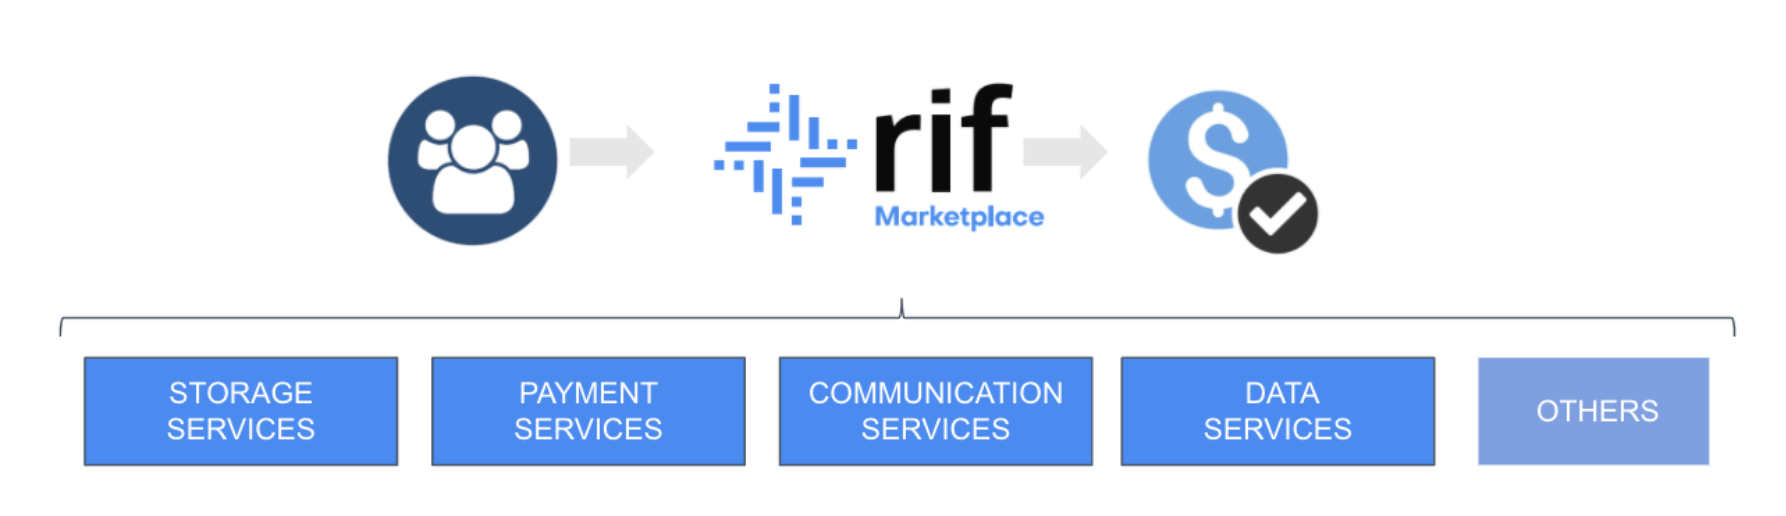 RIF Marketplace Services